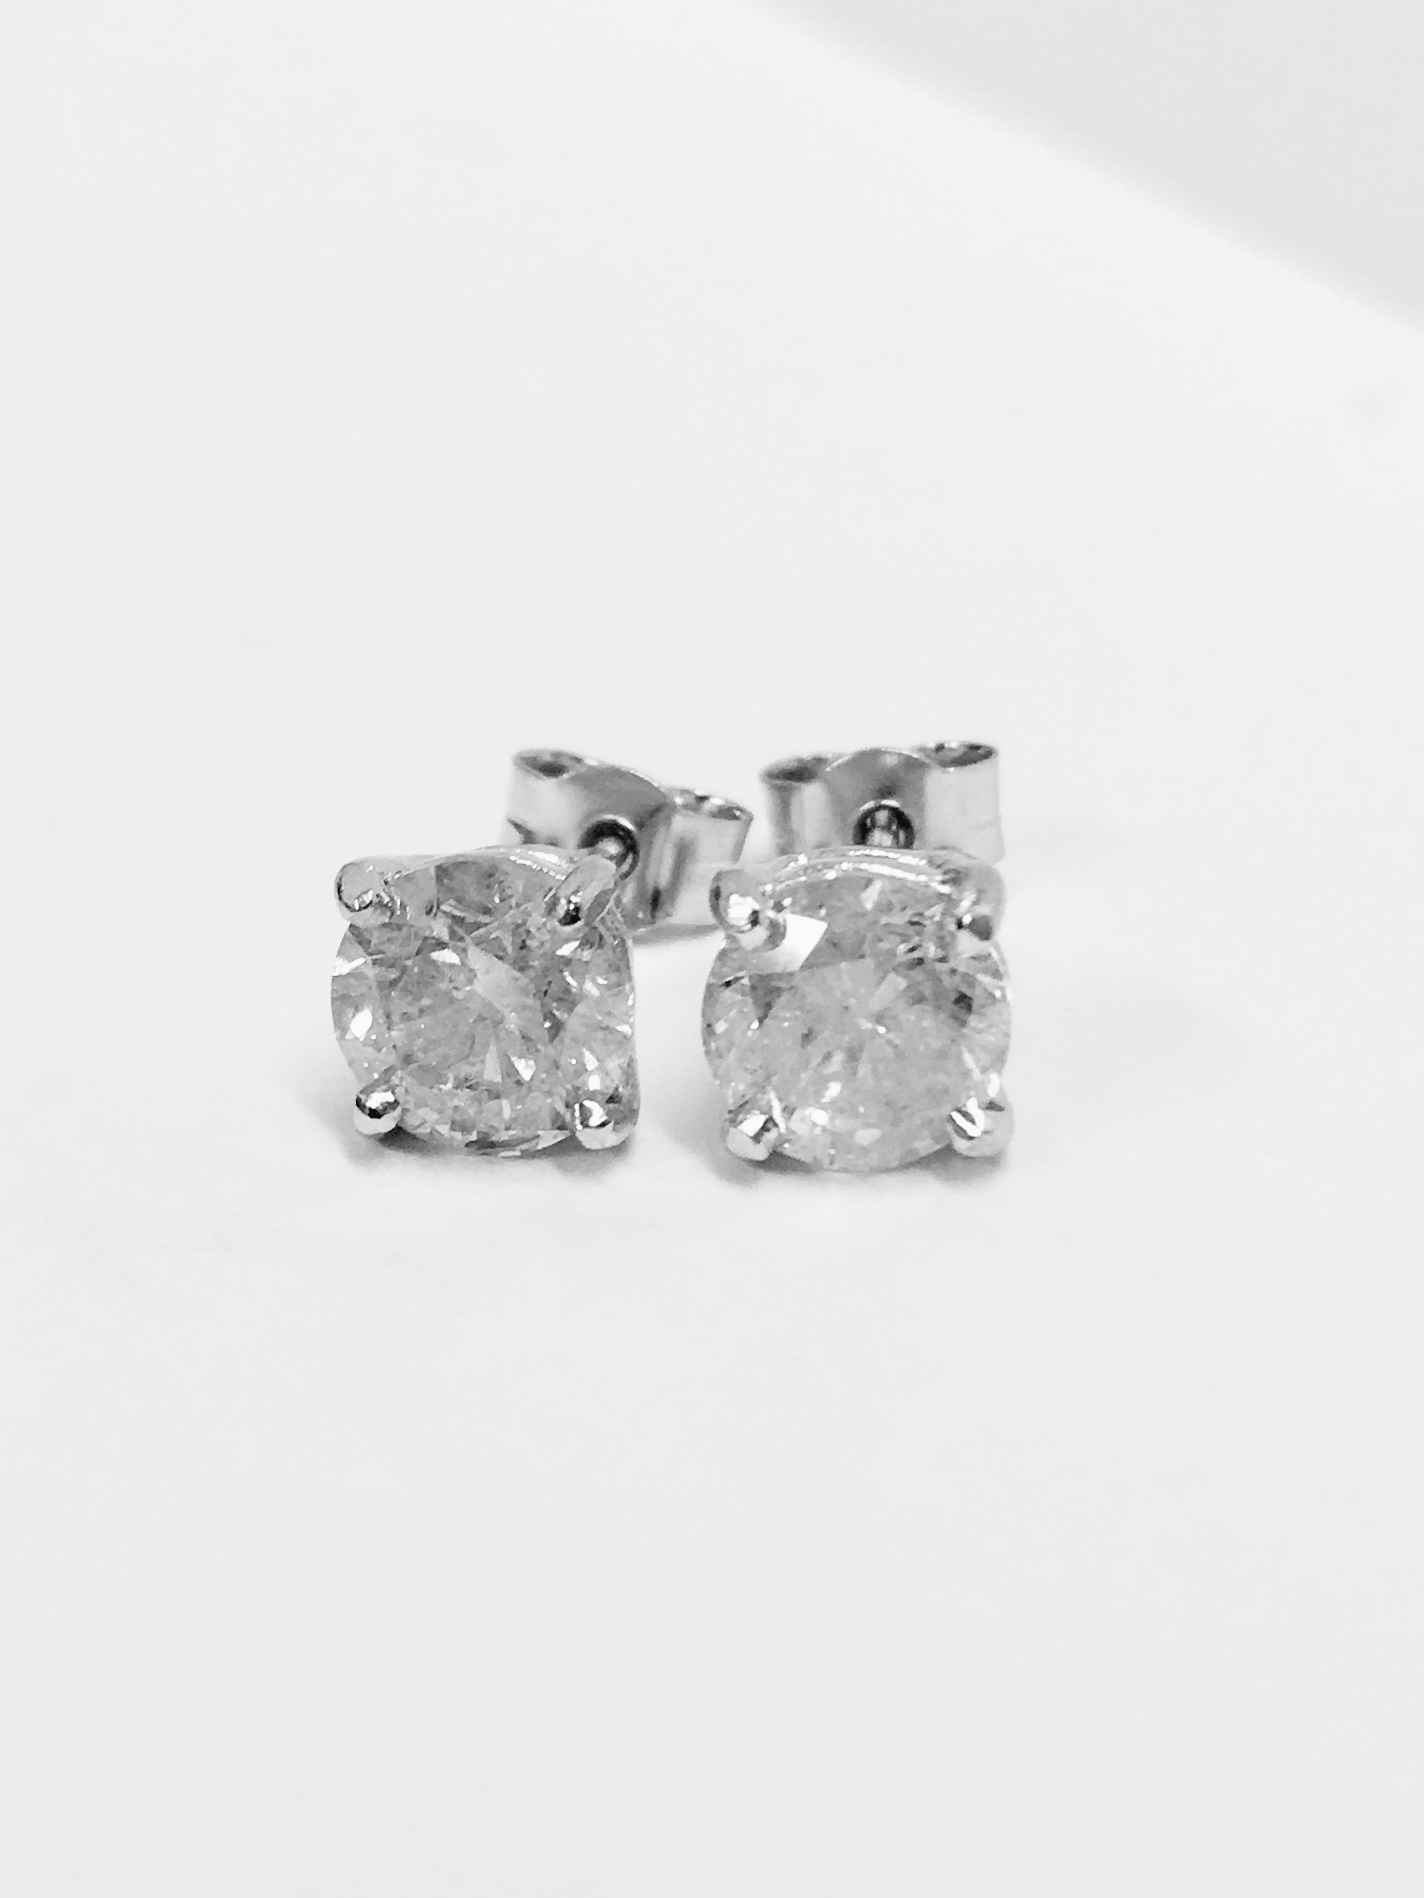 2.02Ct Solitaire Diamond Stud Earrings Set With Brilliant Cut Diamonds.